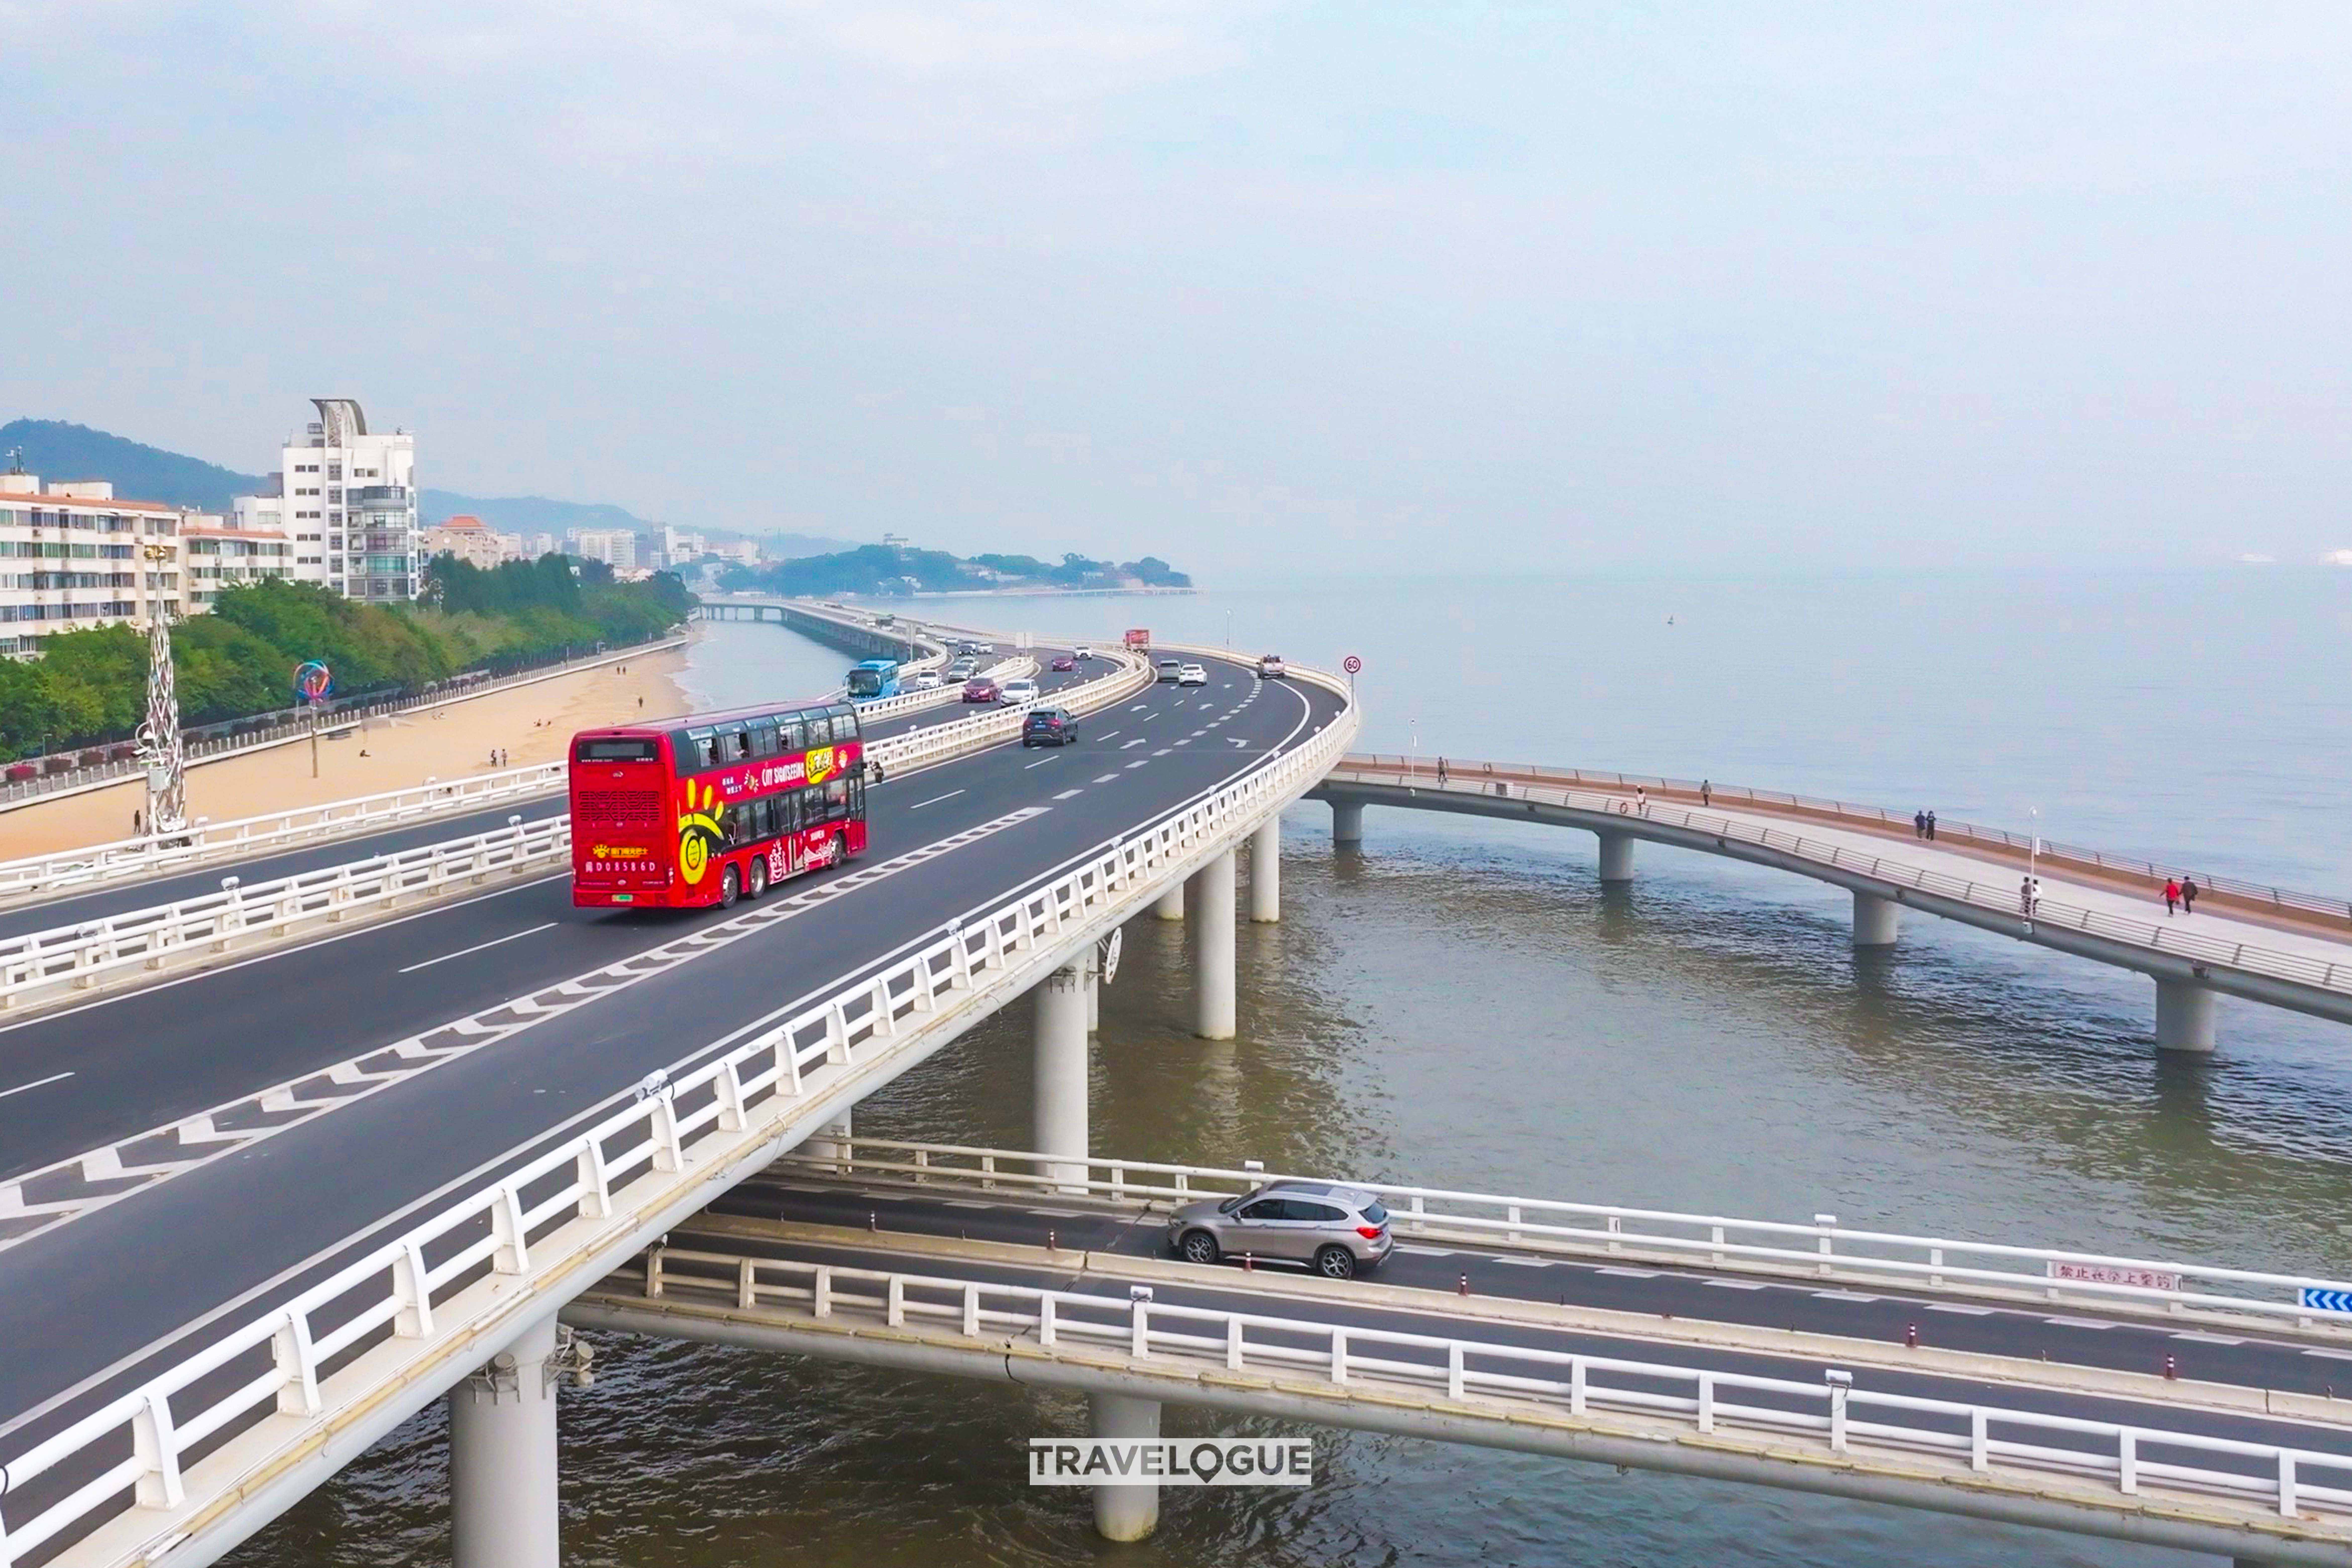 The sightseeing bus route has 20 stops in Xiamen, Fujian Province. /CGTN